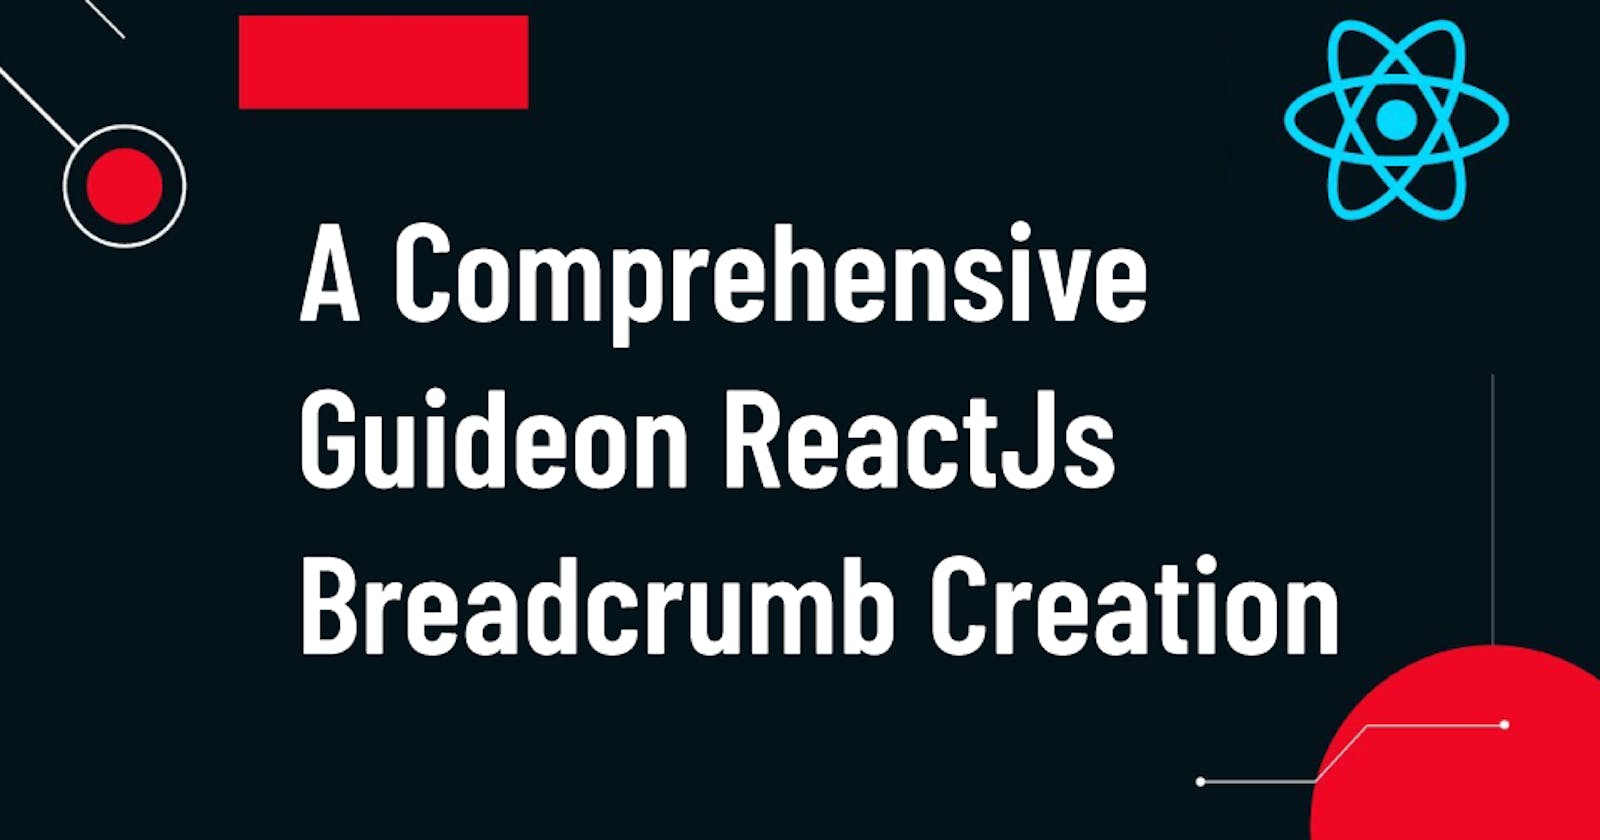 A Comprehensive Guide on ReactJS Breadcrumb Creation